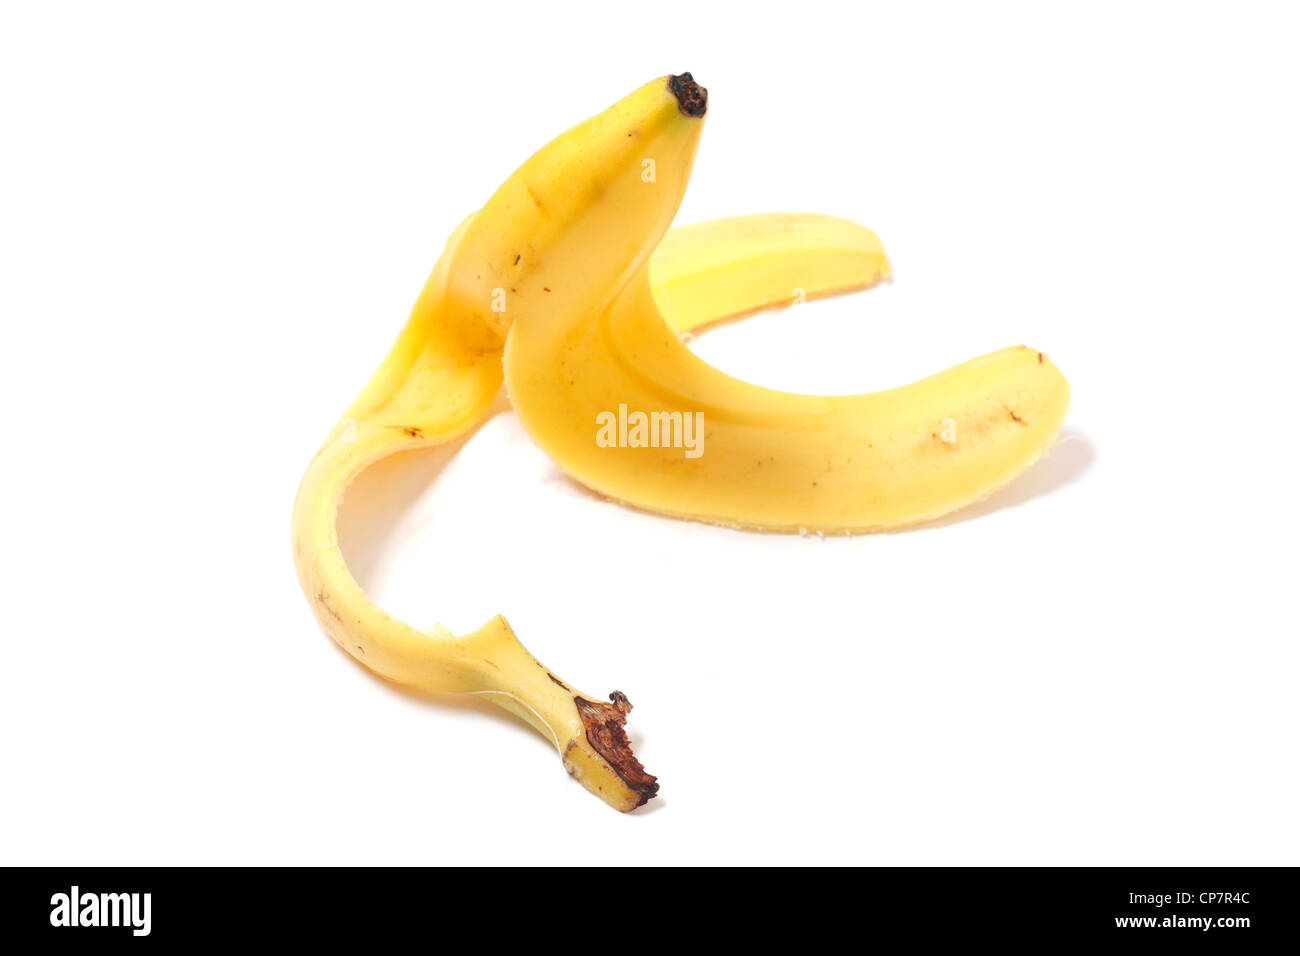 A banana peel on the ground Stock Photo